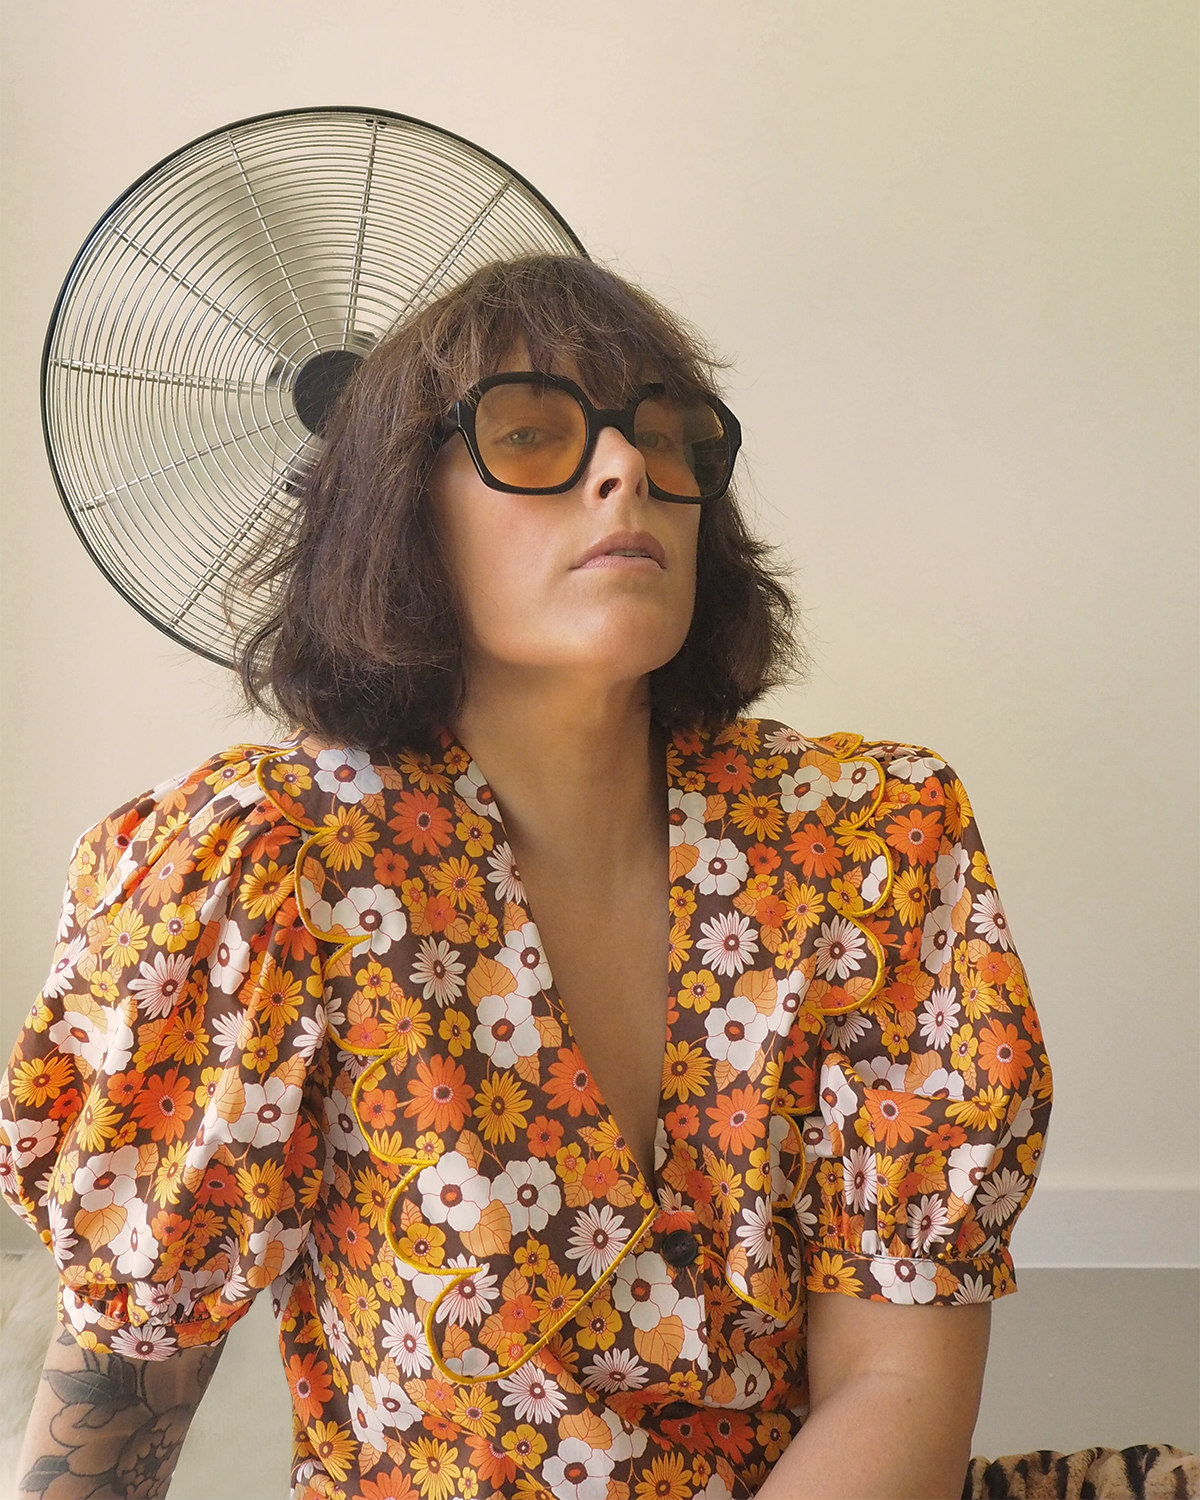 Bulky square-shaped sunglasses. '70s vintage essentials. Credits @annacascarina